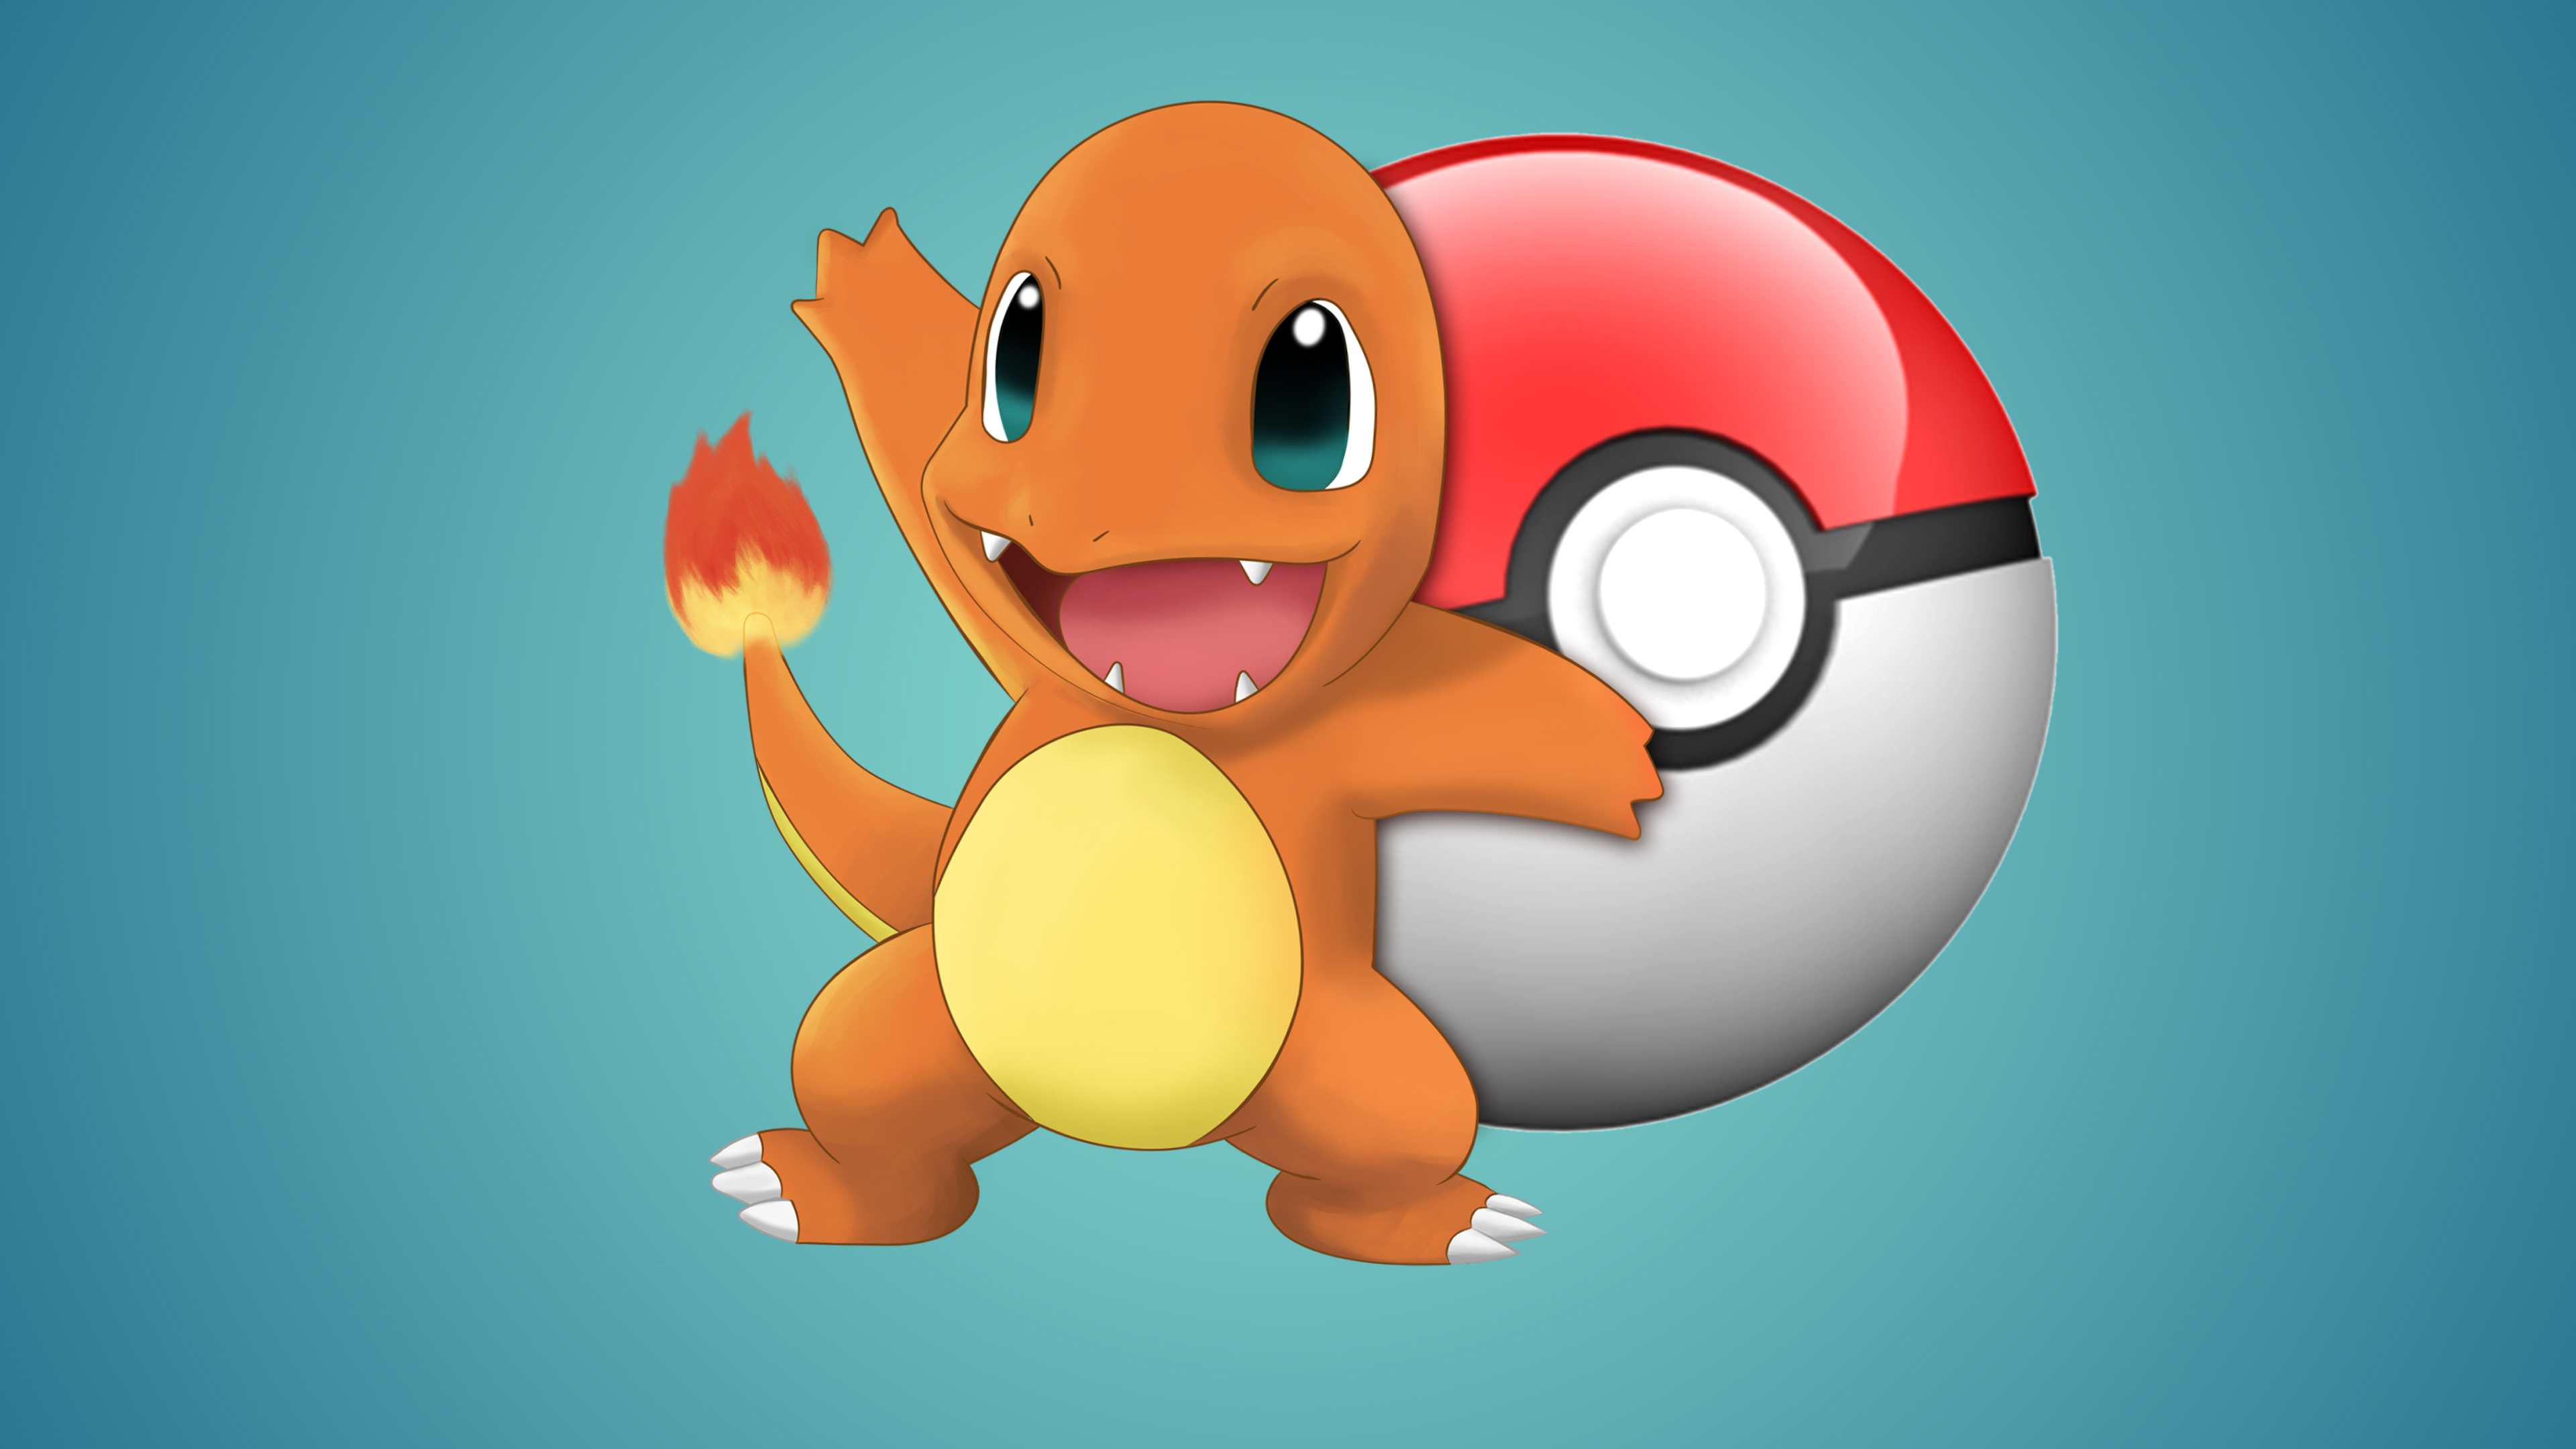 Descarga gratis la imagen Pokémon, Animado, Charmander (Pokémon), Pokebola en el escritorio de tu PC